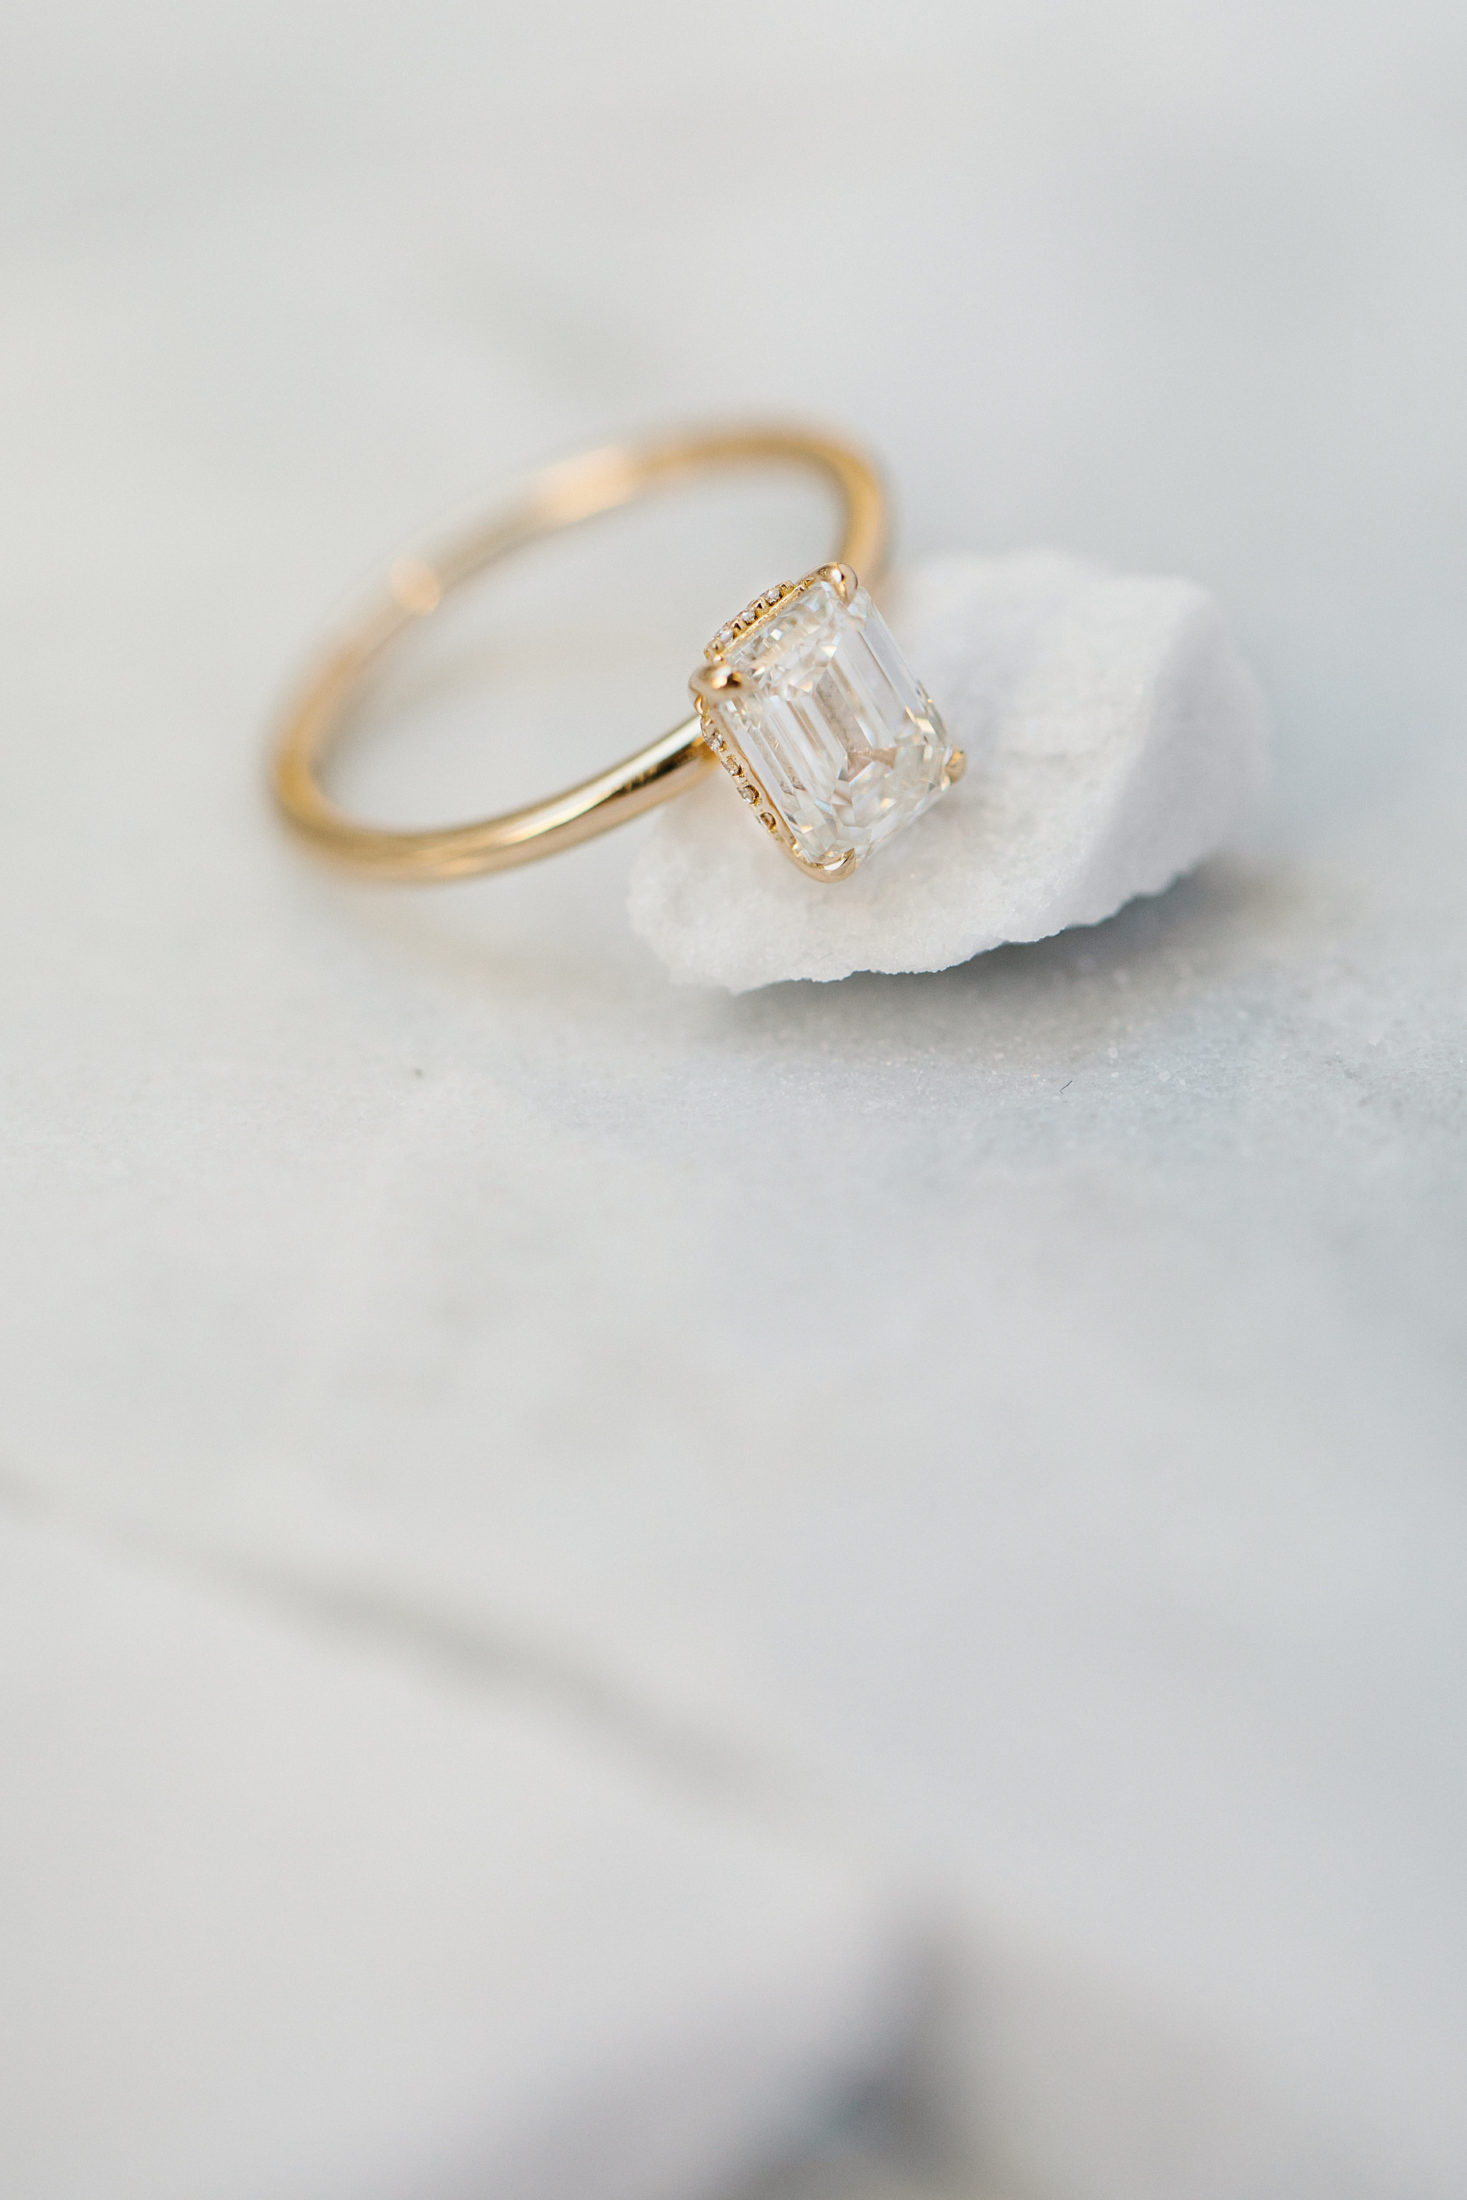 Taylor & Hart Diamond Engagement Ring